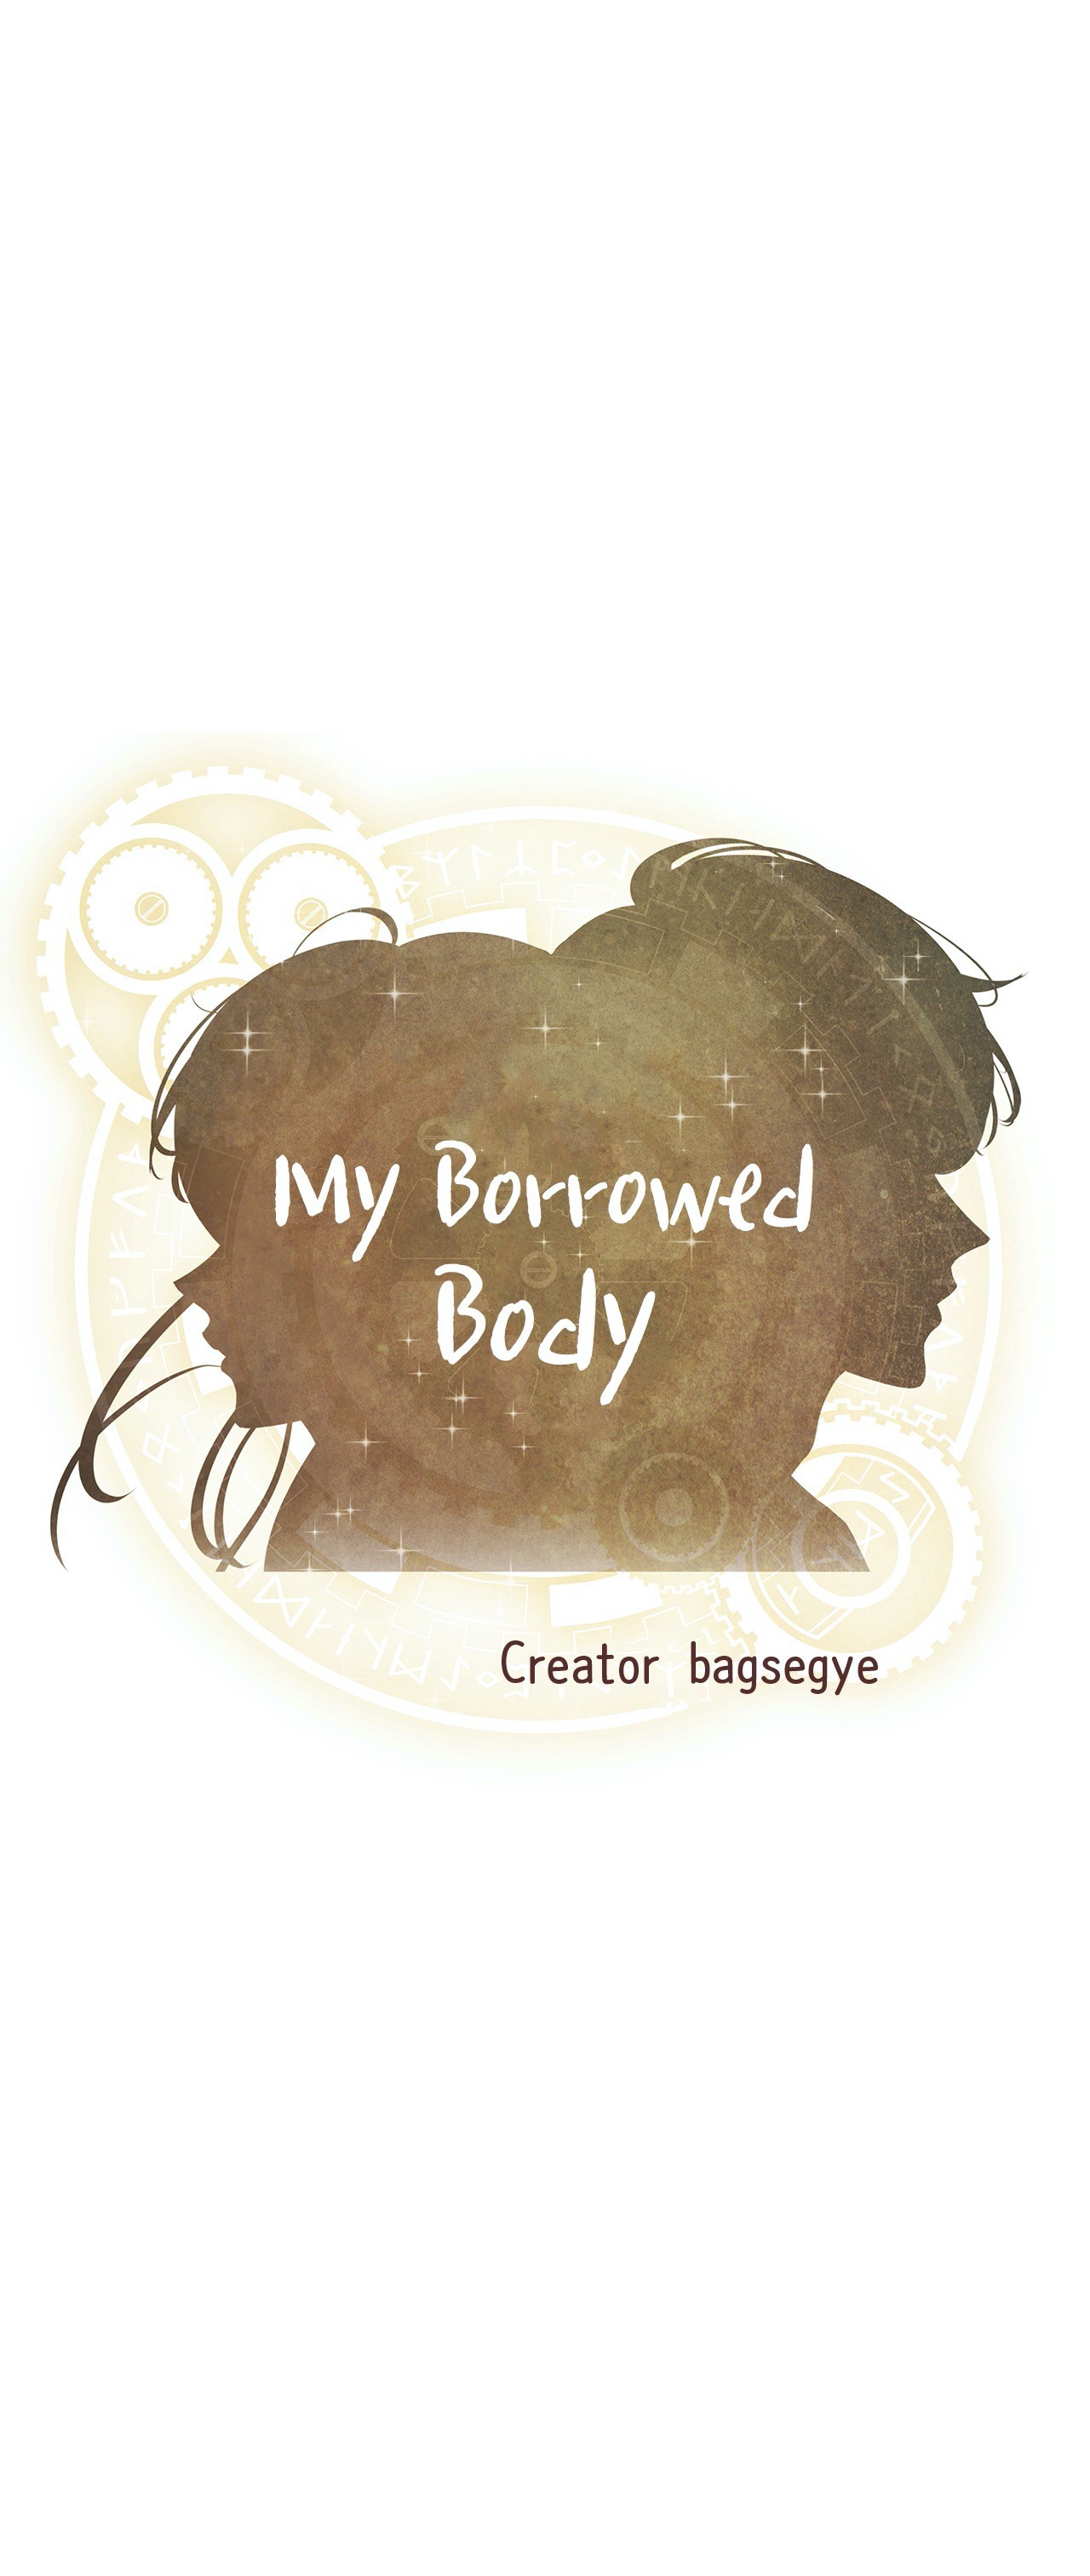 My Borrowed Body image